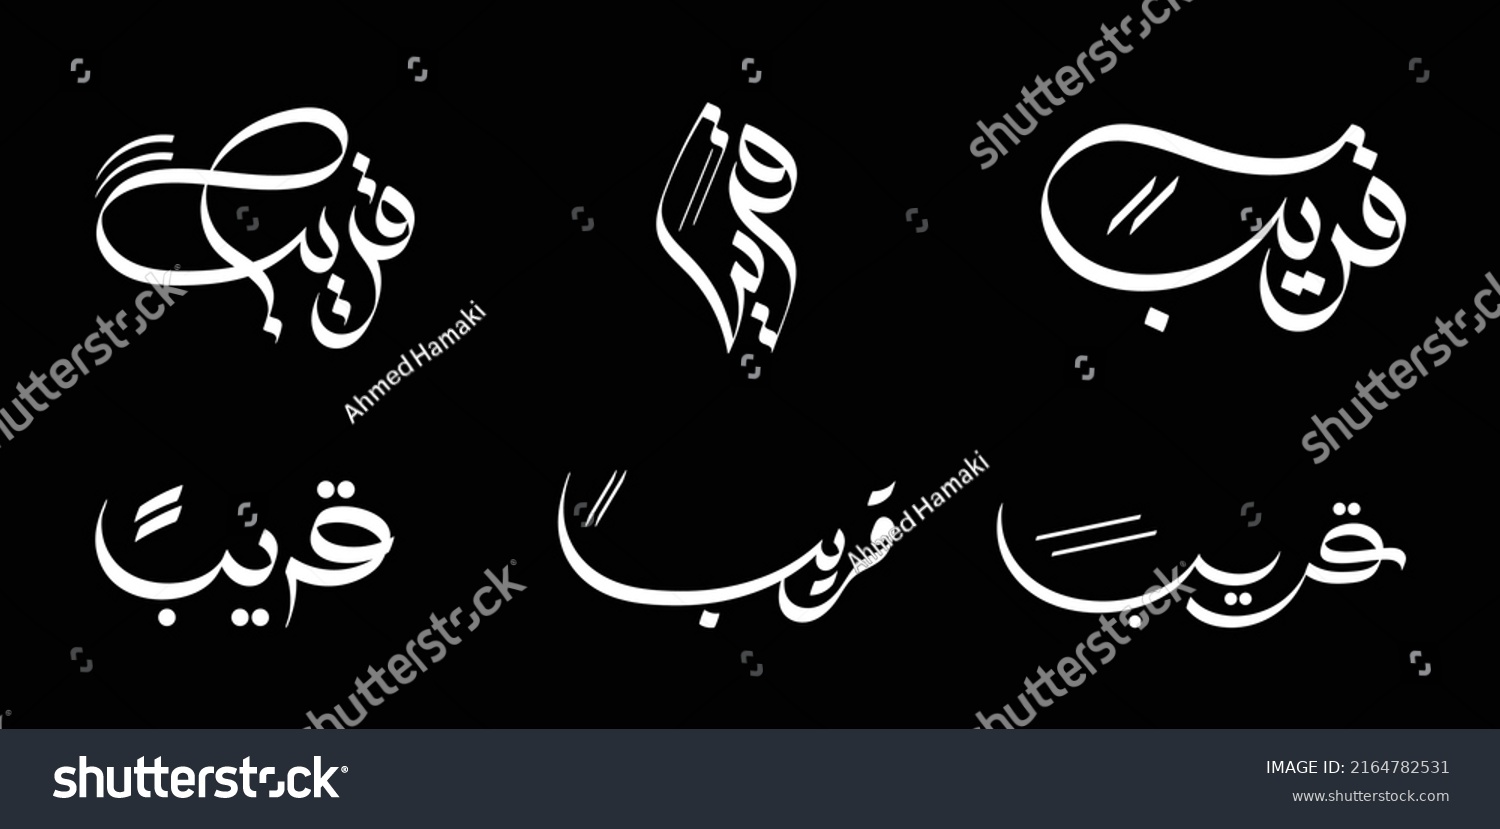 SVG of Soon, a word in English, written in Arabic language - Arabic calligraphy design - Modern svg